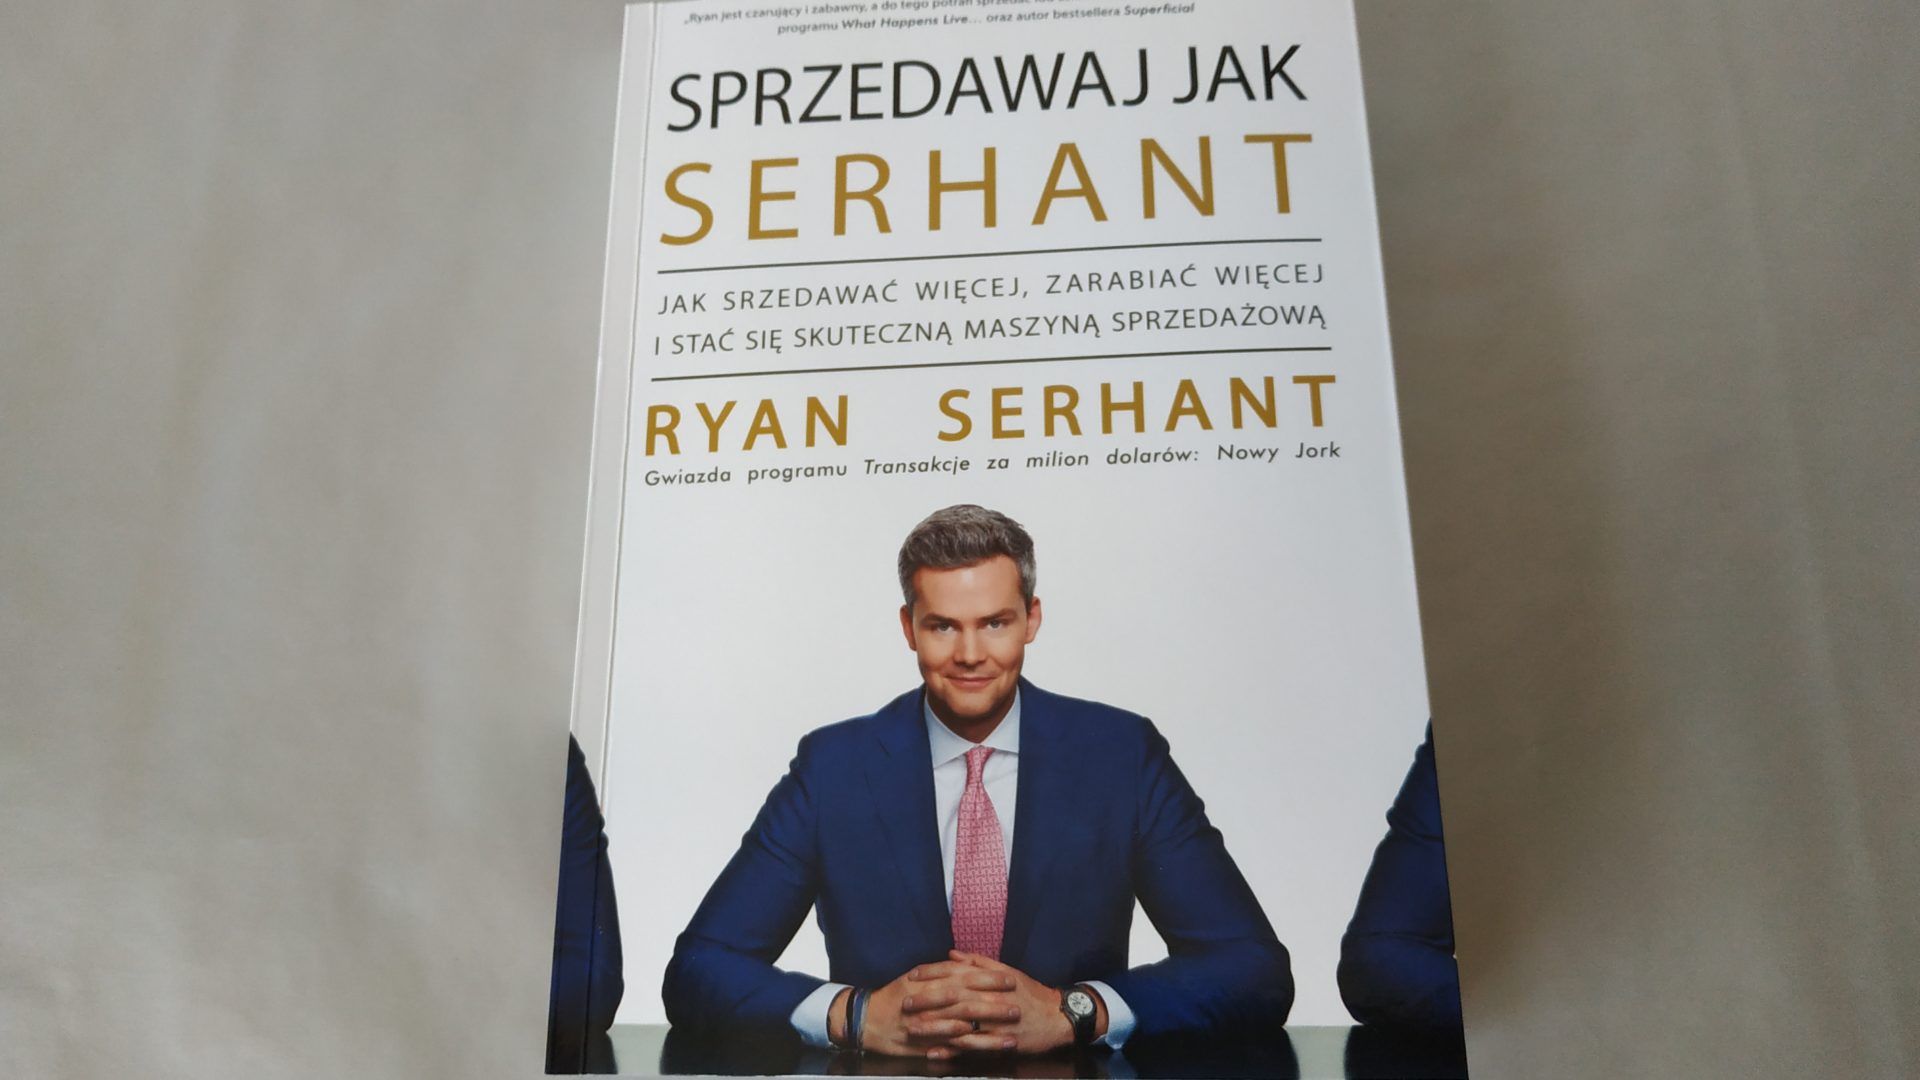 “Sprzedawaj jak Serhant” - Ryan Serhant